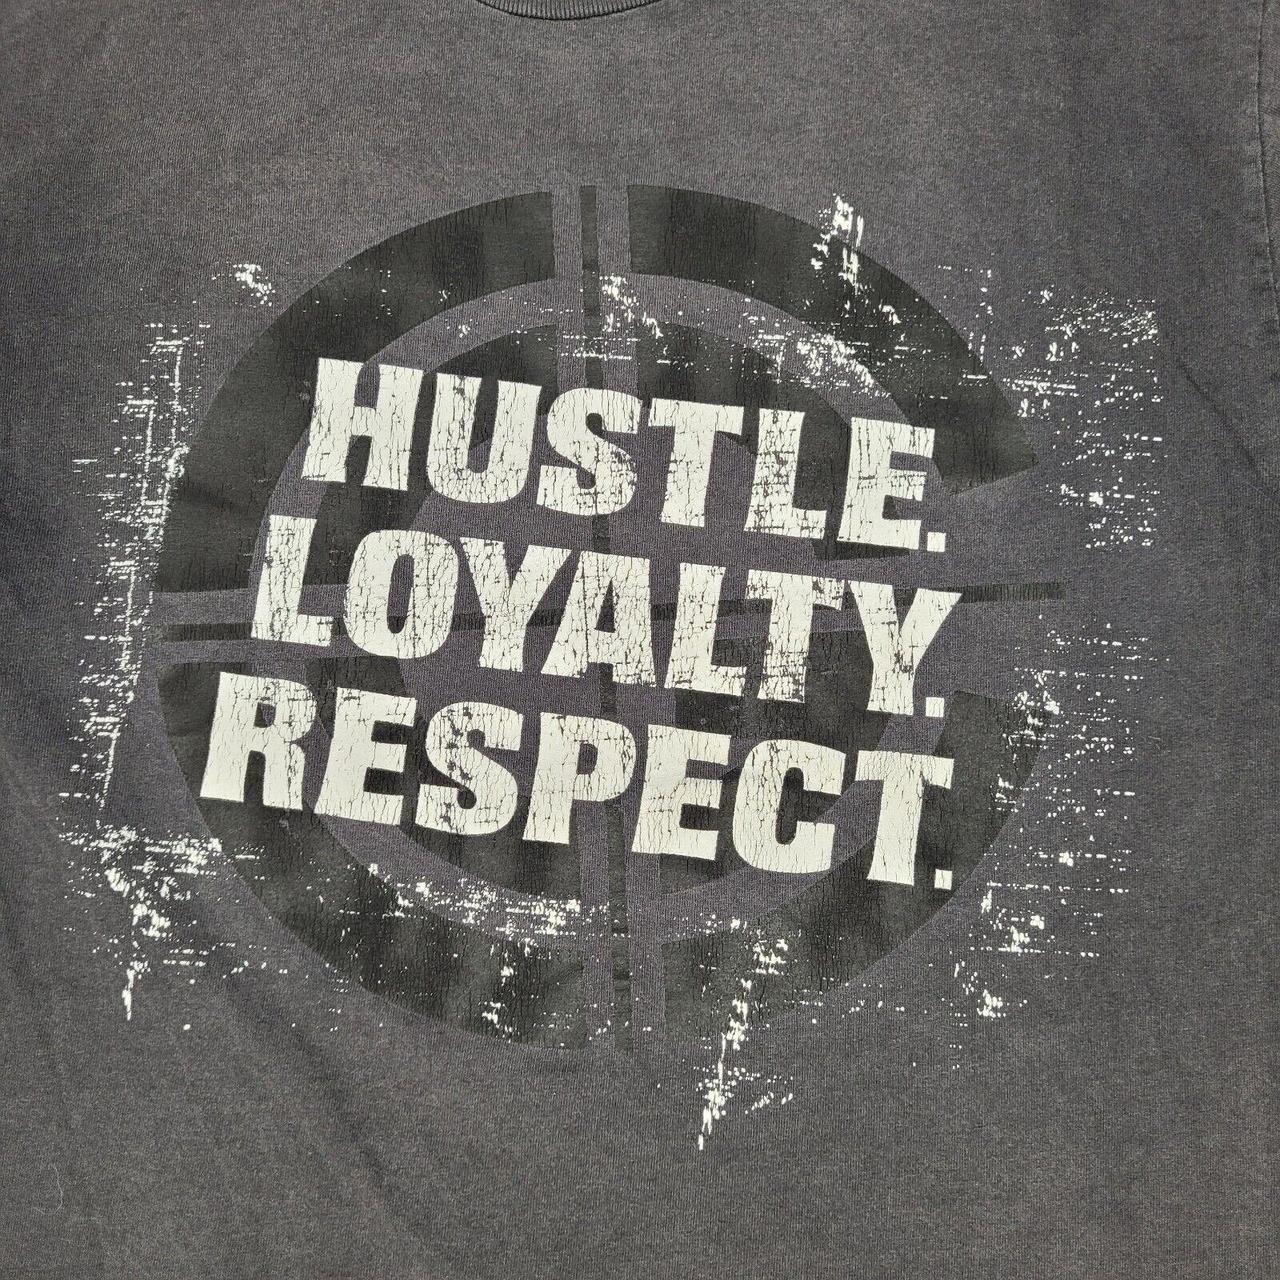 john cena hustle loyalty respect t shirt